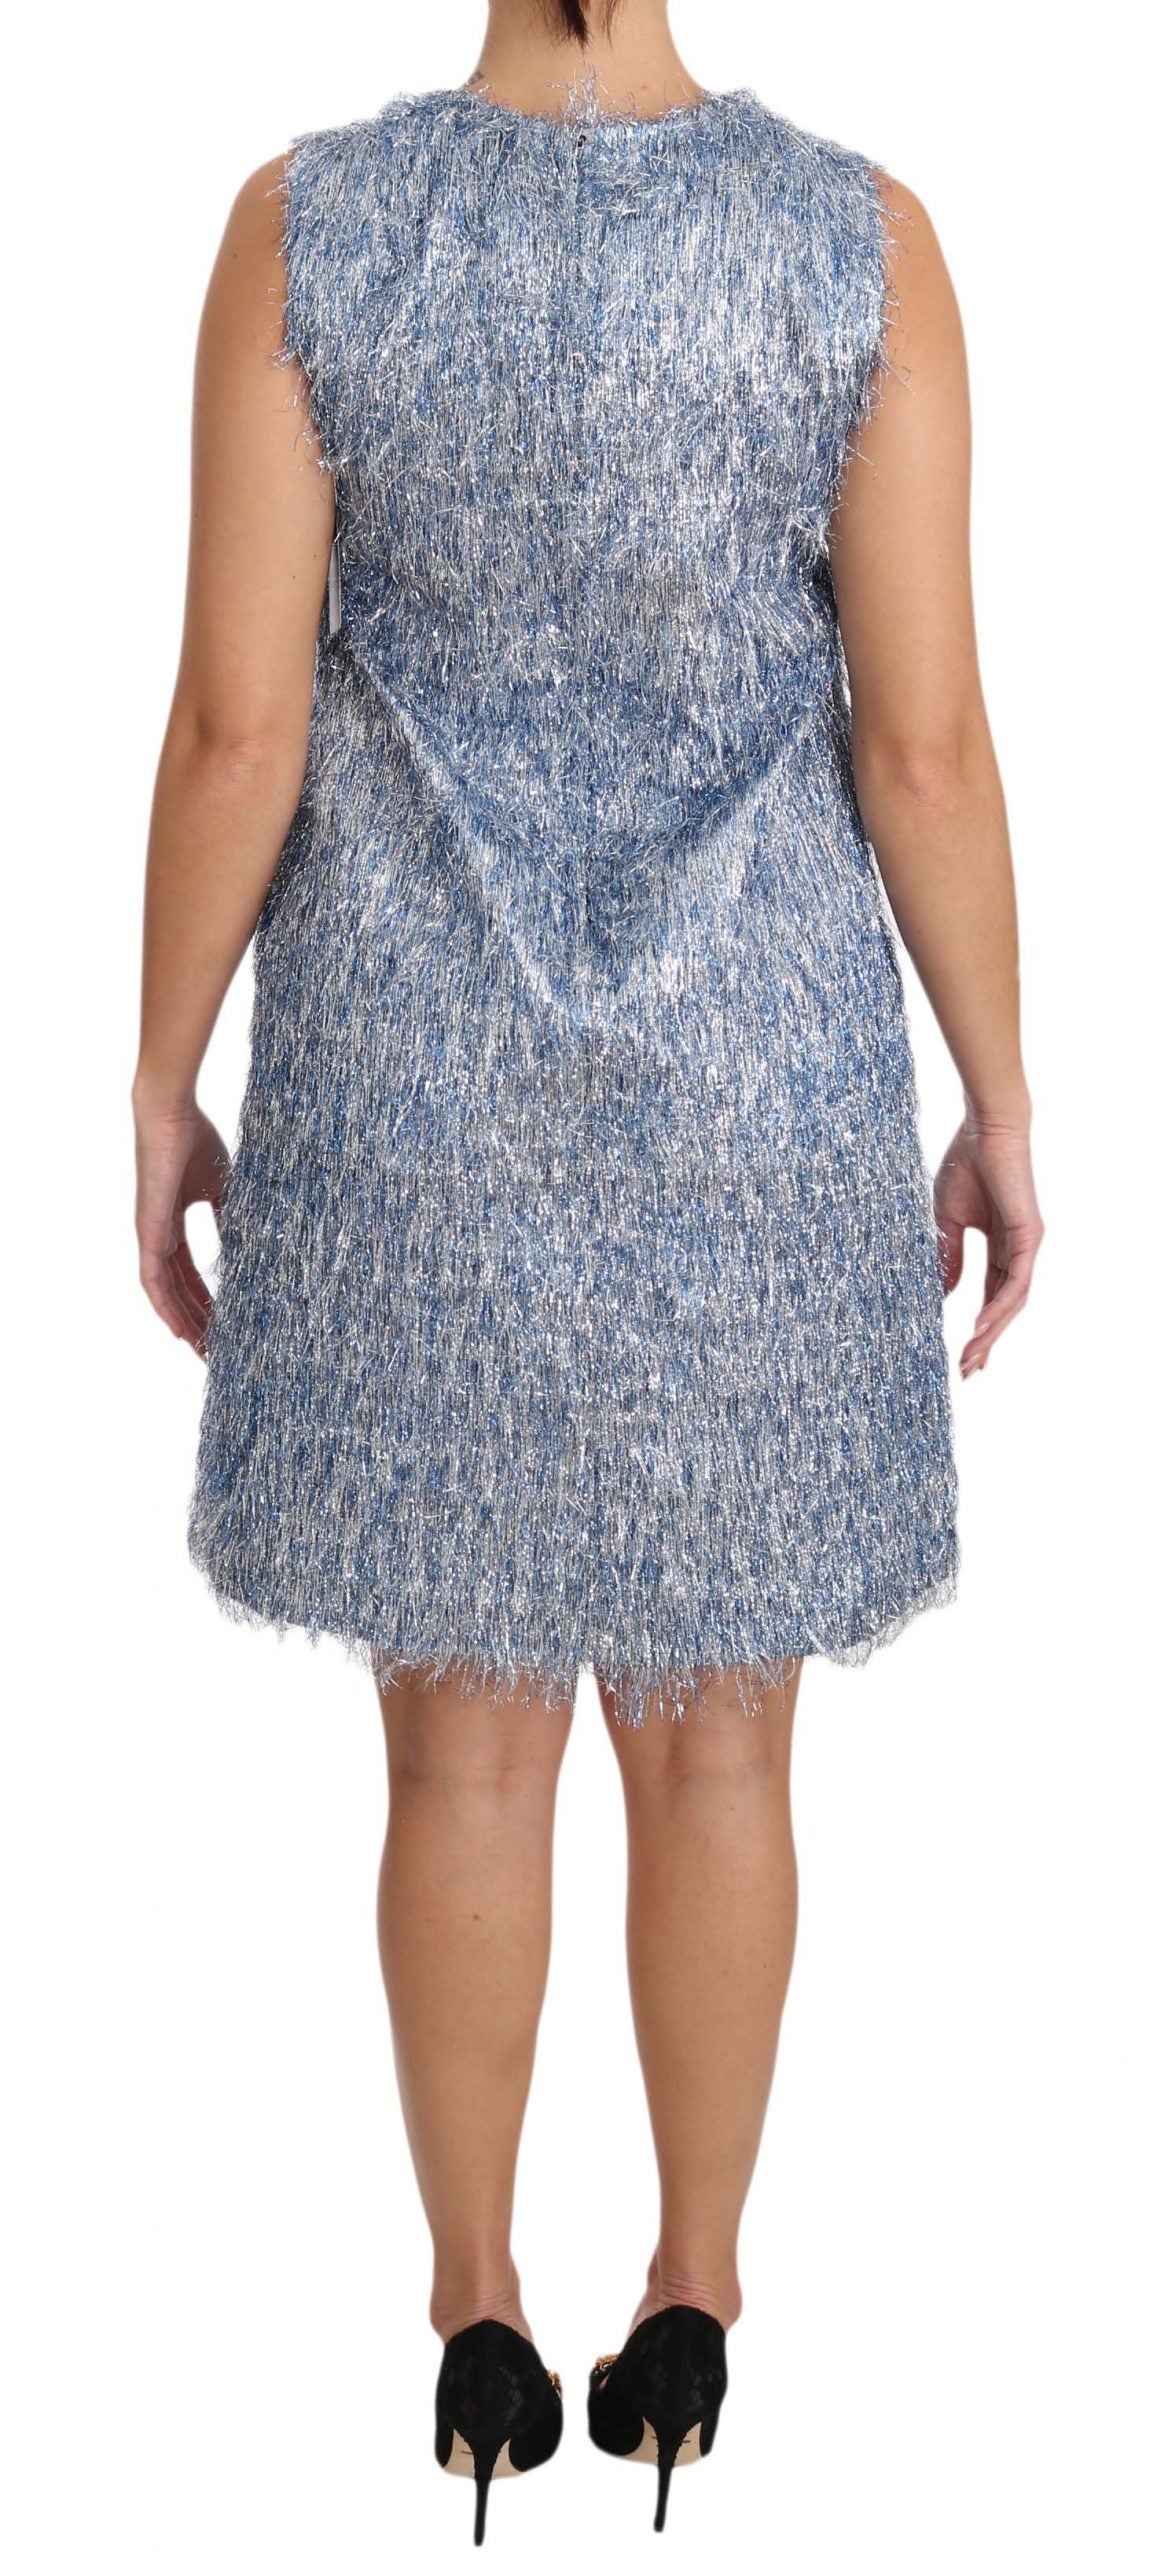 Dolce & Gabbana Light Blue Fringe Shift Gown Dress